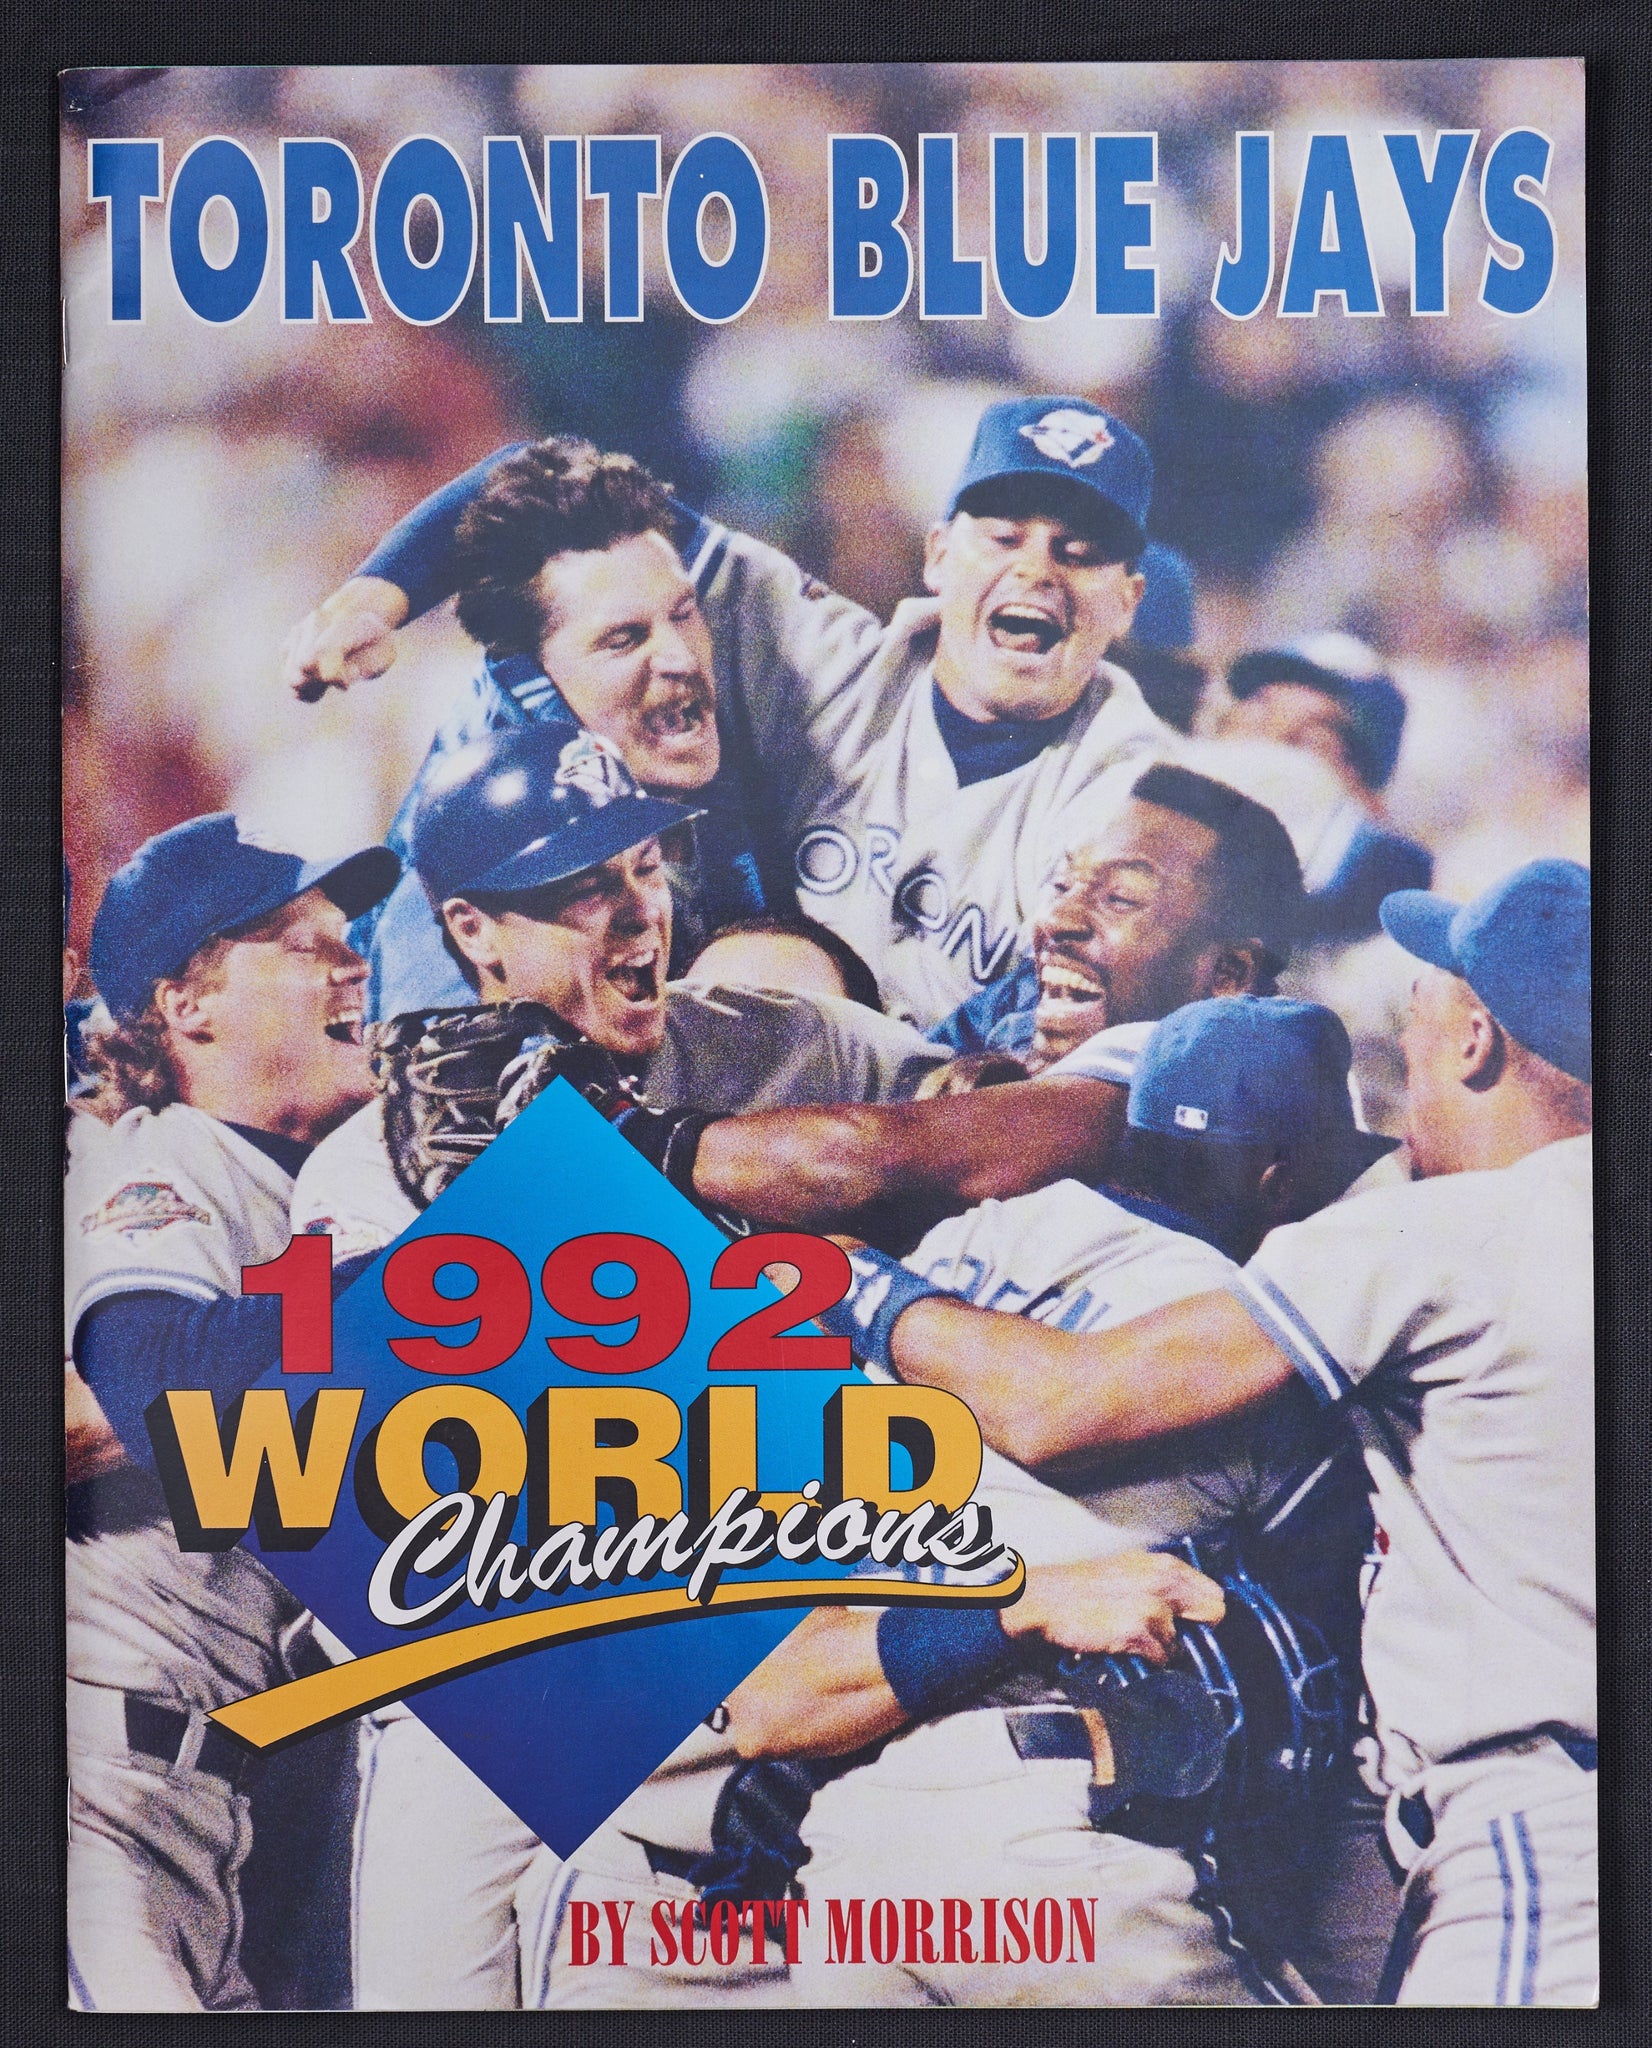 Toronto Blue Jays, 1992 World Champions, Booklet By Scott Morrison